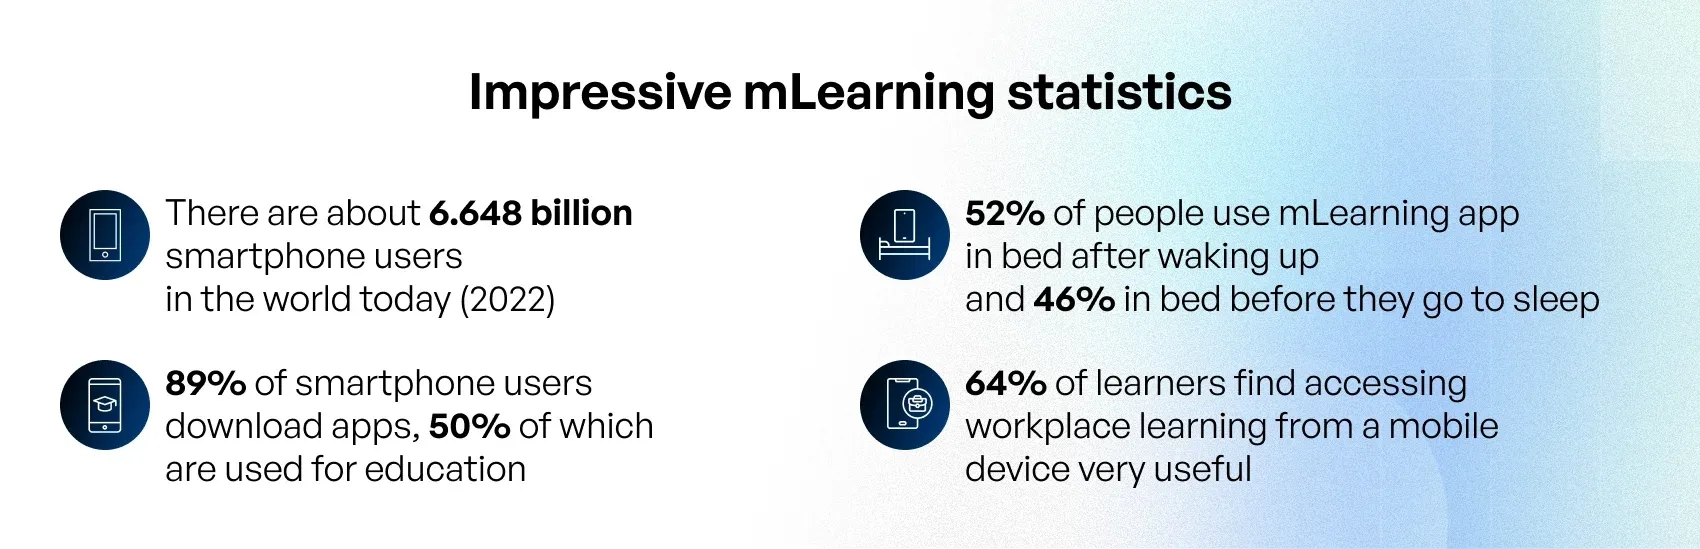 mLearning statistics